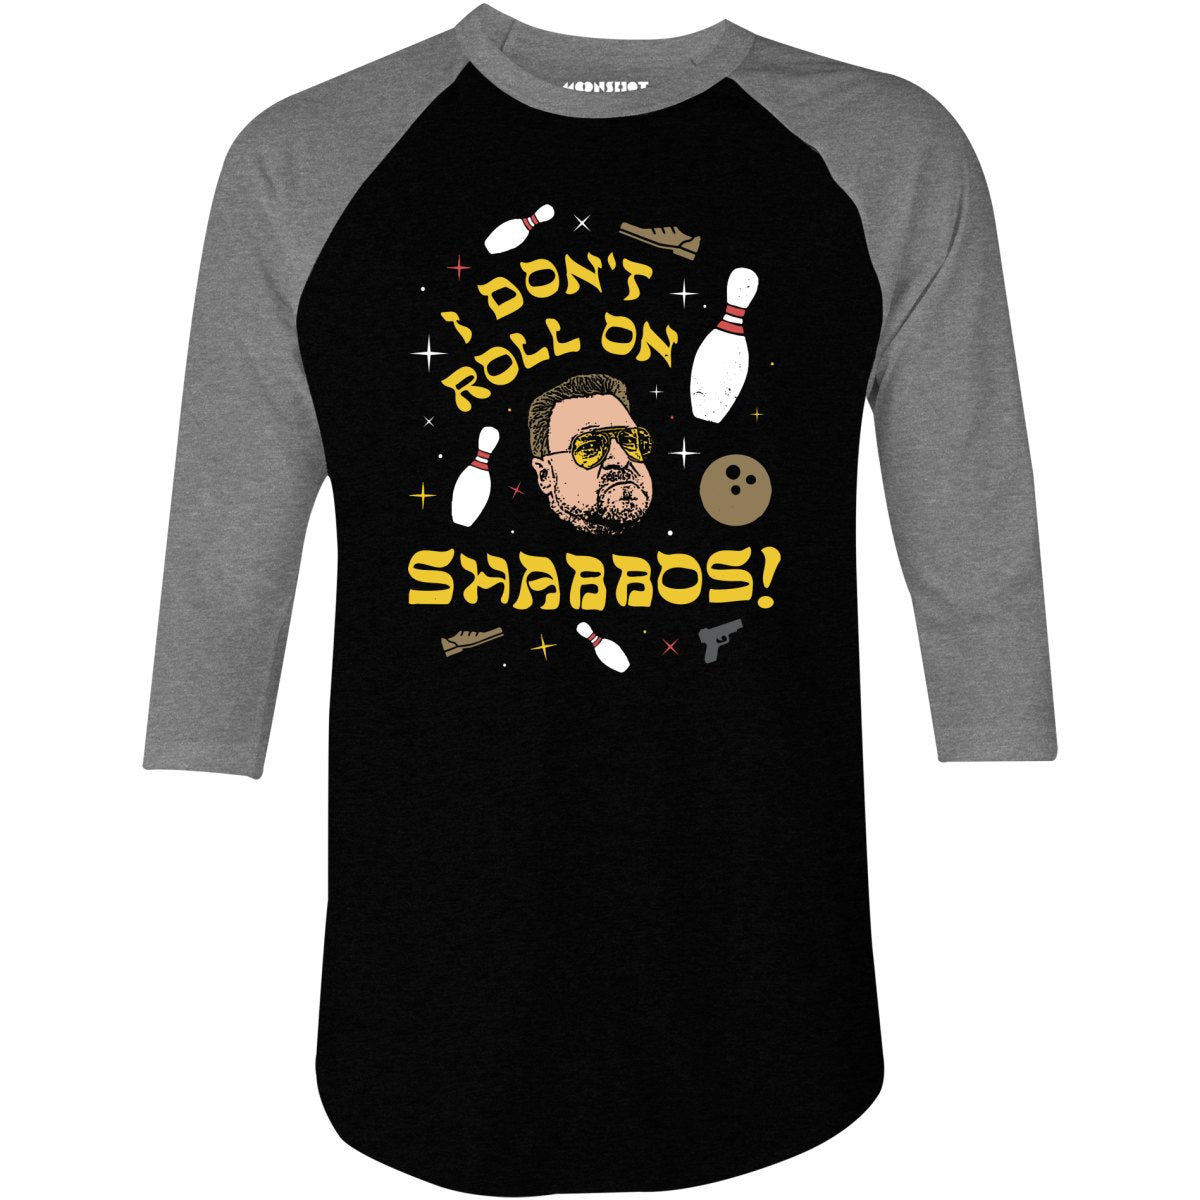 I Don't Roll on Shabbos - 3/4 Sleeve Raglan T-Shirt